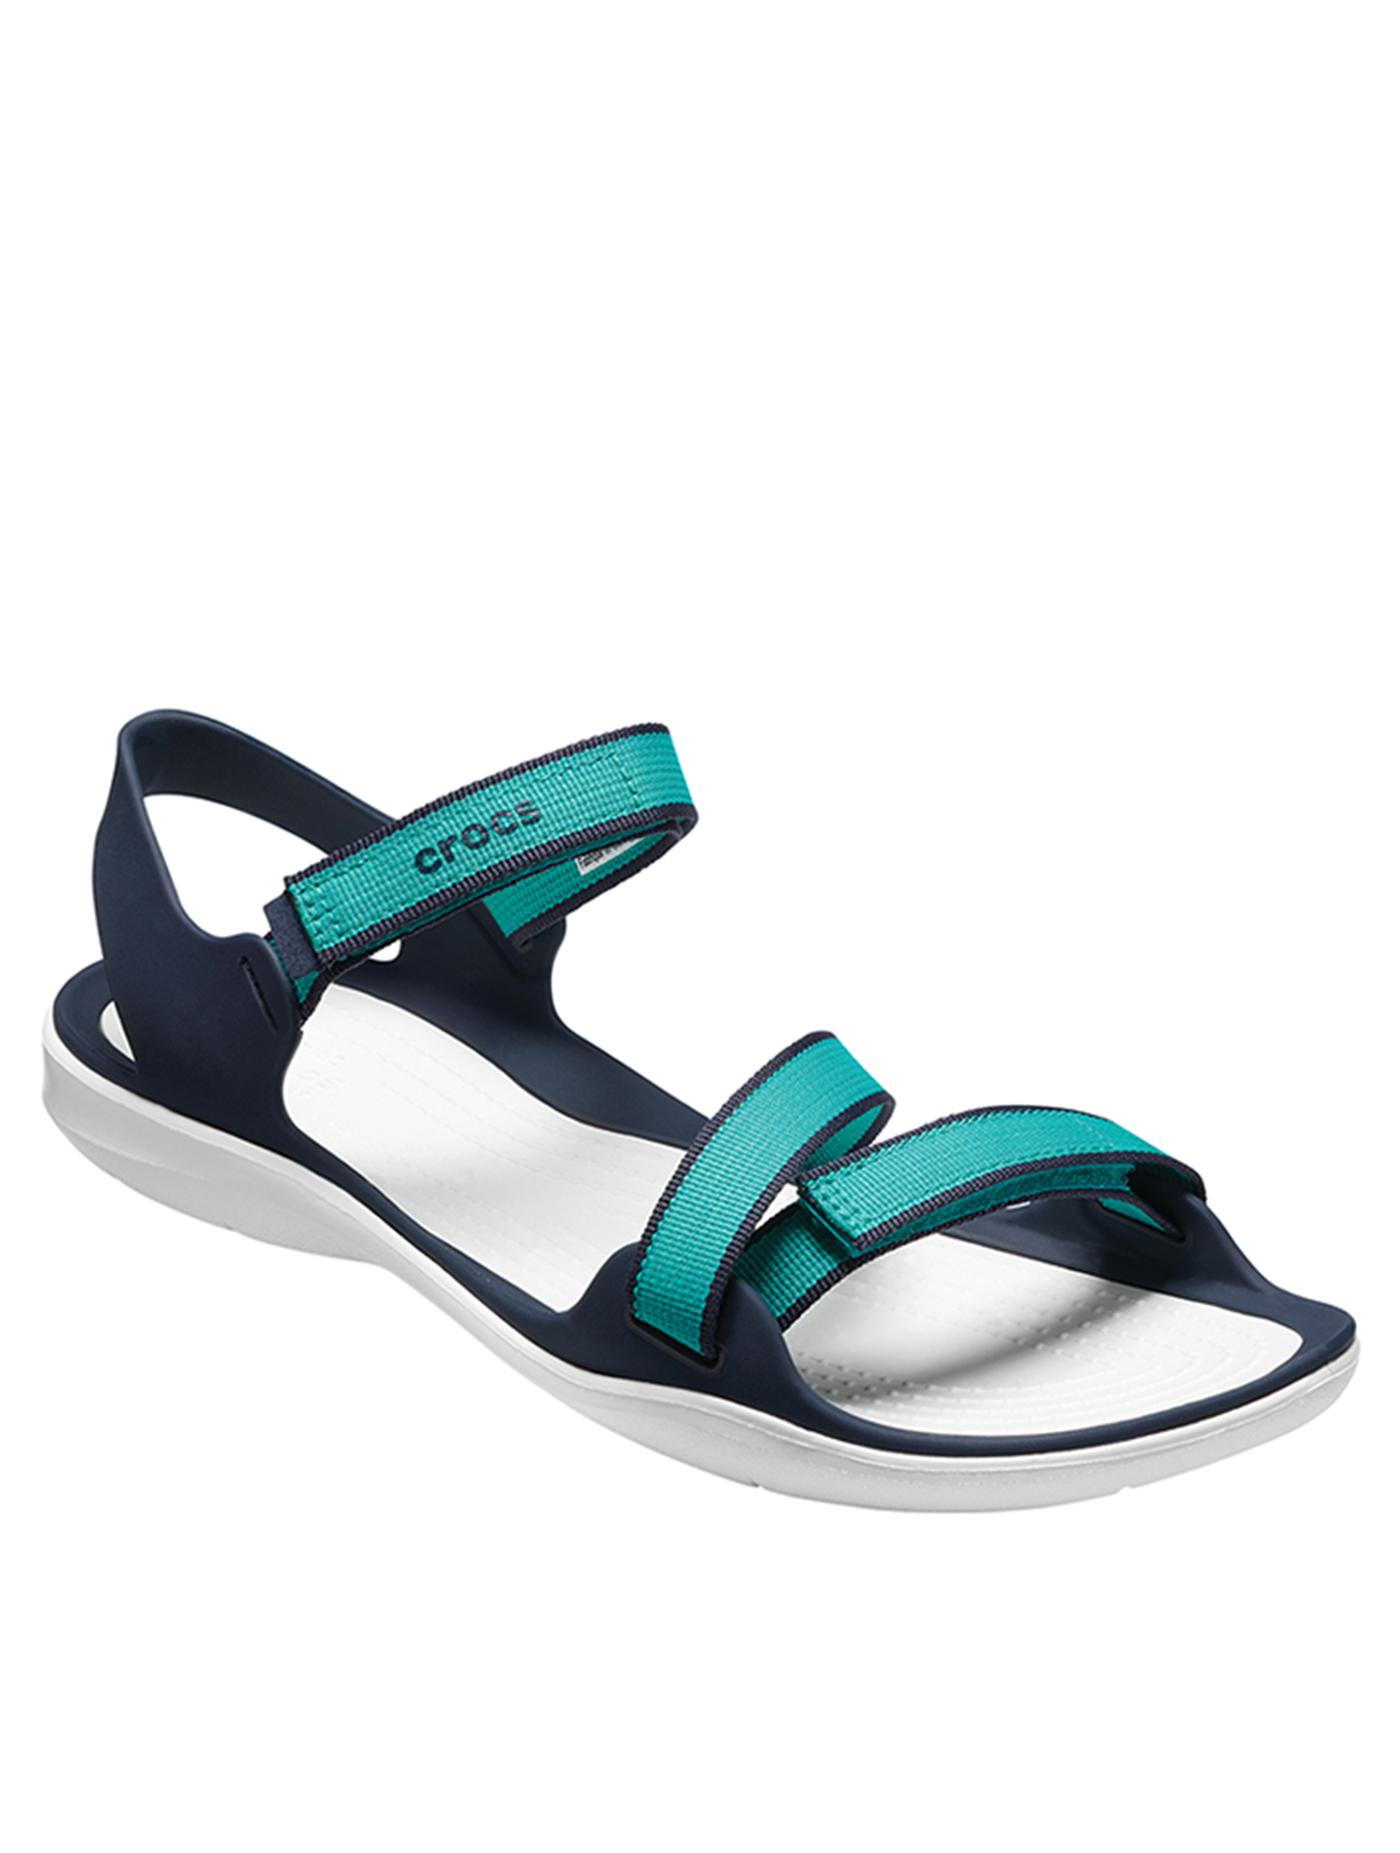 CROCS รองเท้าลำลองผู้หญิง รุ่น Swiftwater Webbing ไซส์ W8 สีTropical Teal